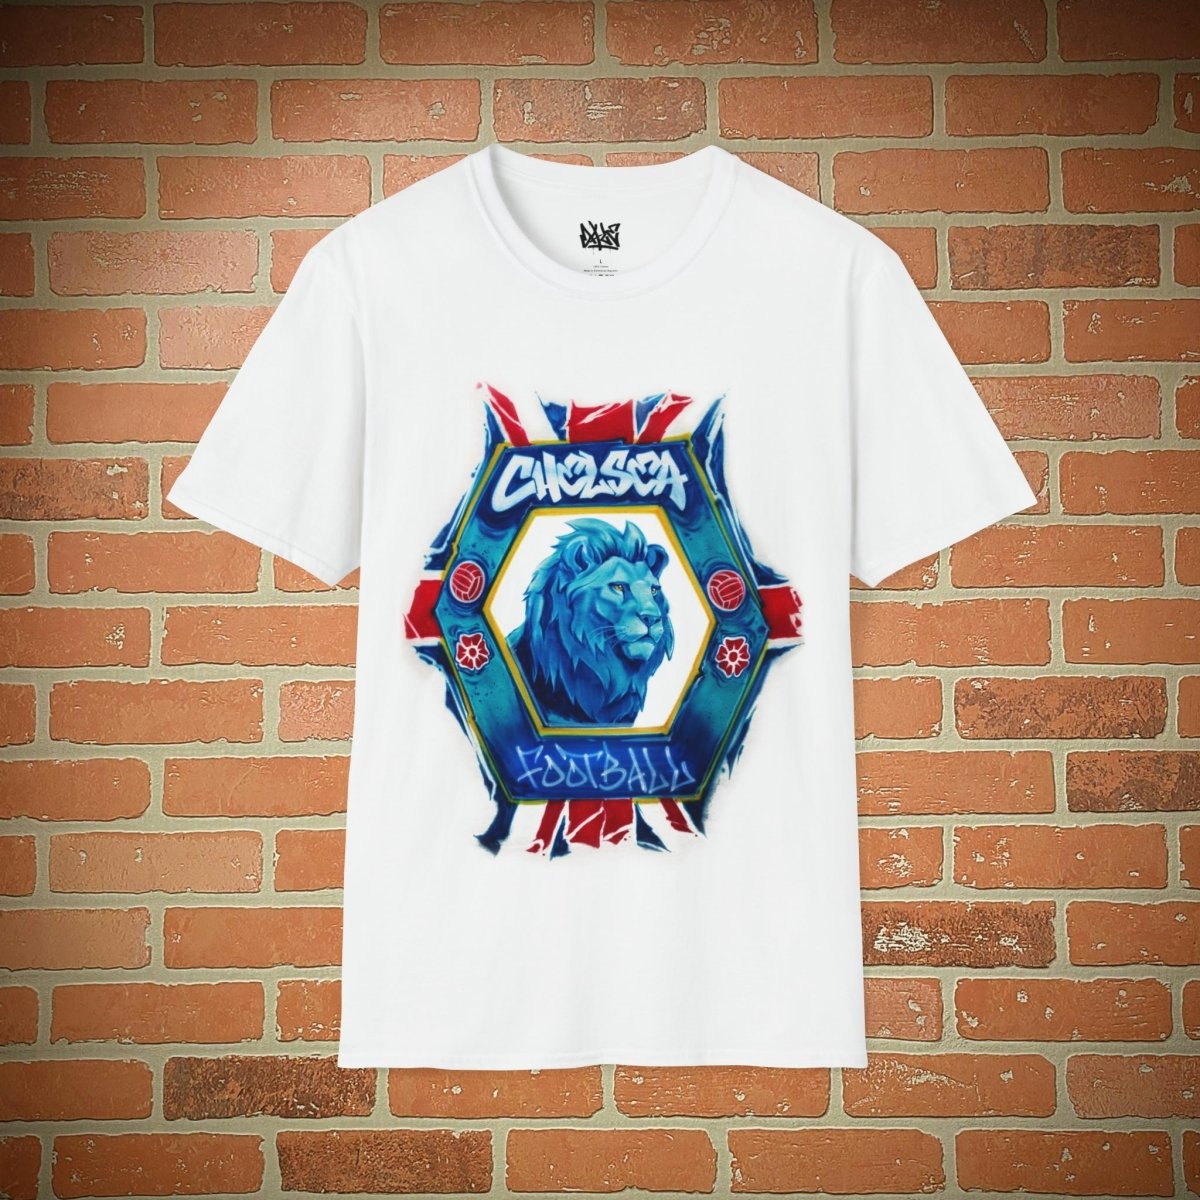 Chelsea FC Graffiti Style Shirt Customizable Airbrush T shirt Design from Airbrush Customs x Dale The Airbrush Guy